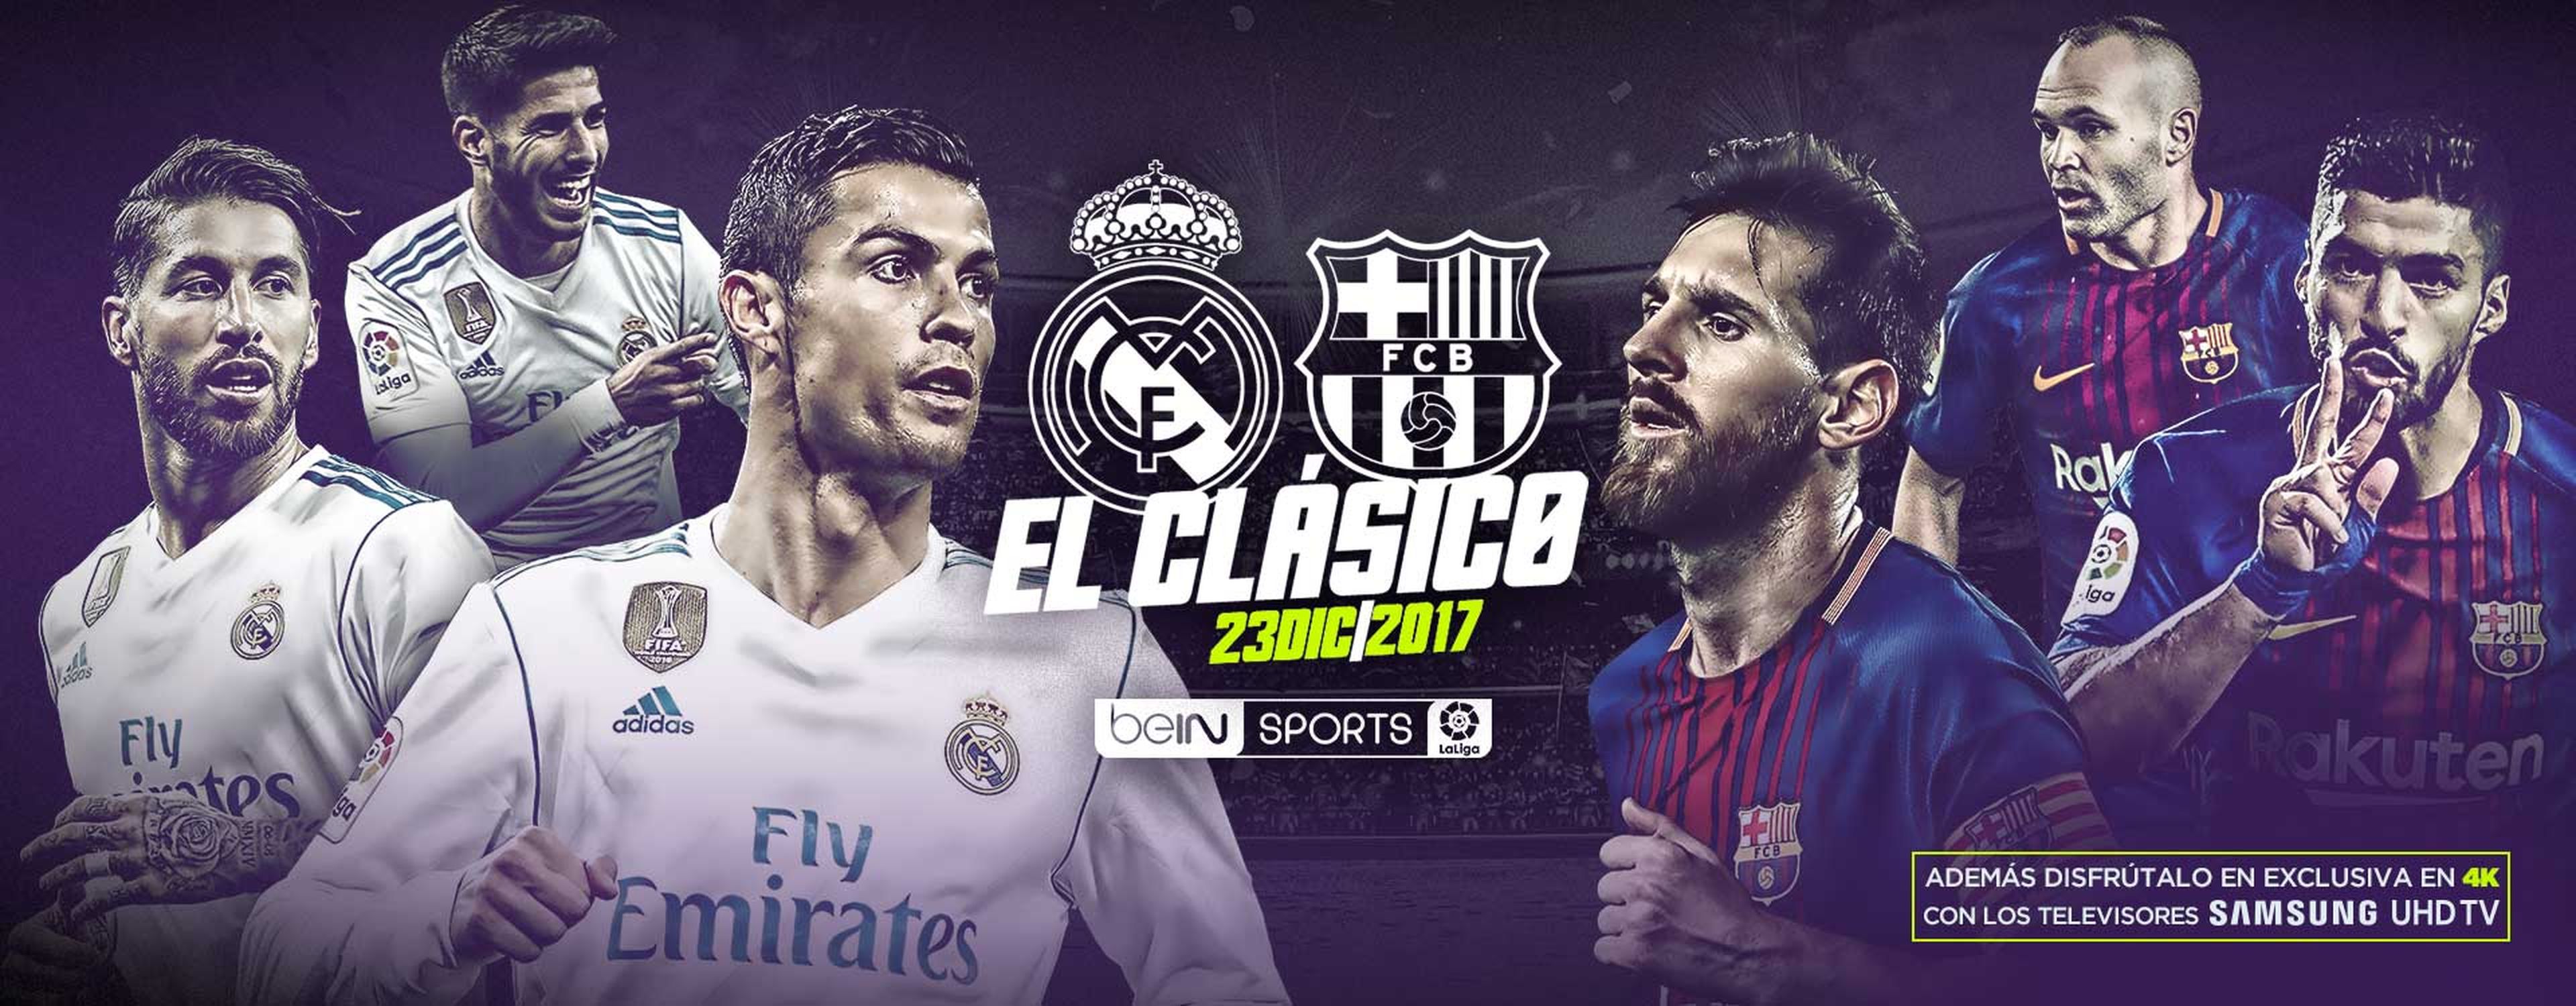 Clásico Real Madrid Barcelona en beIN Sports